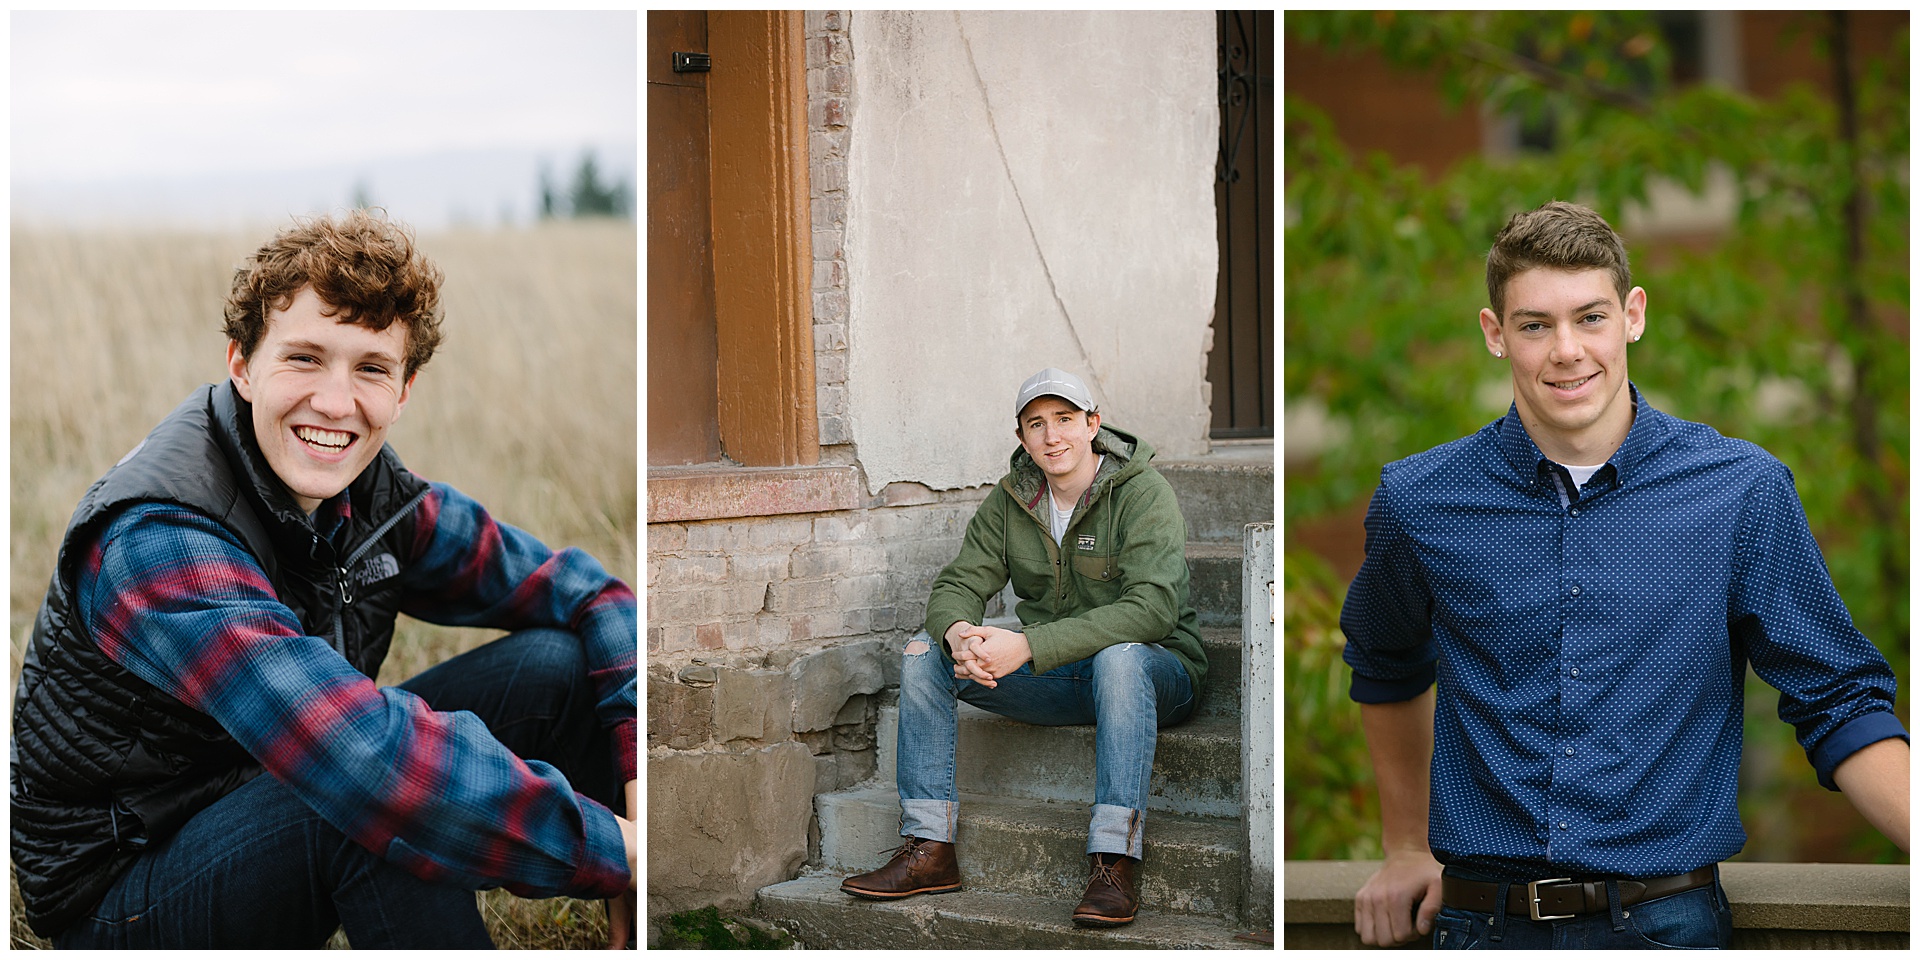 Senior boy portraits outdoors by senior photographer Alison Smith